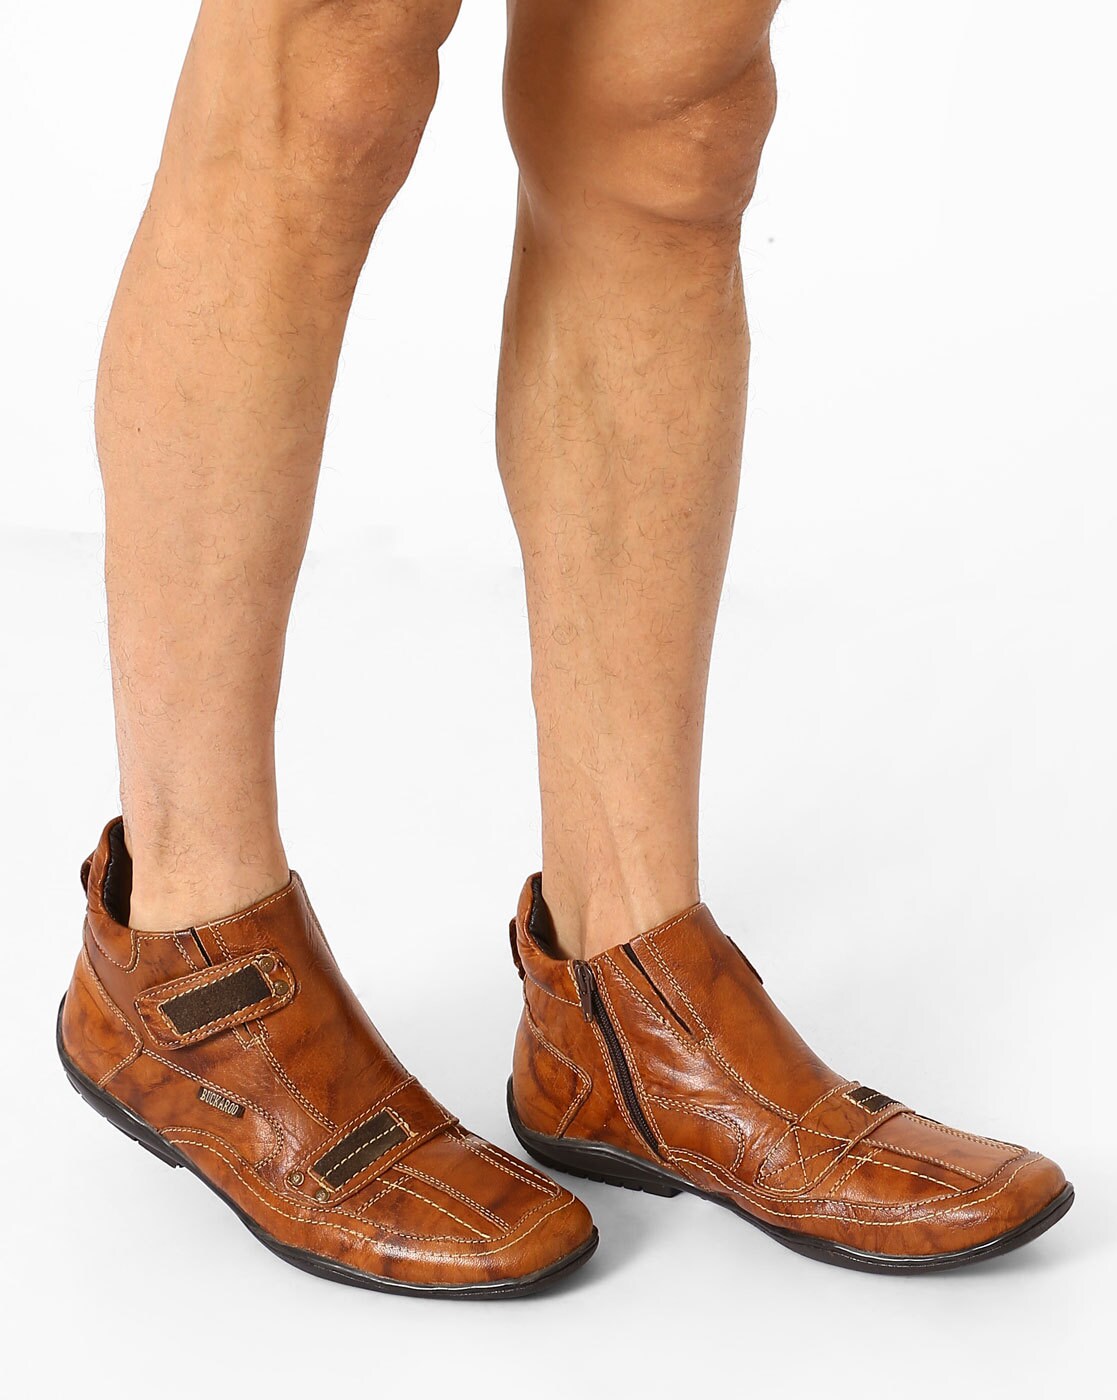 buckaroo casual leather shoes